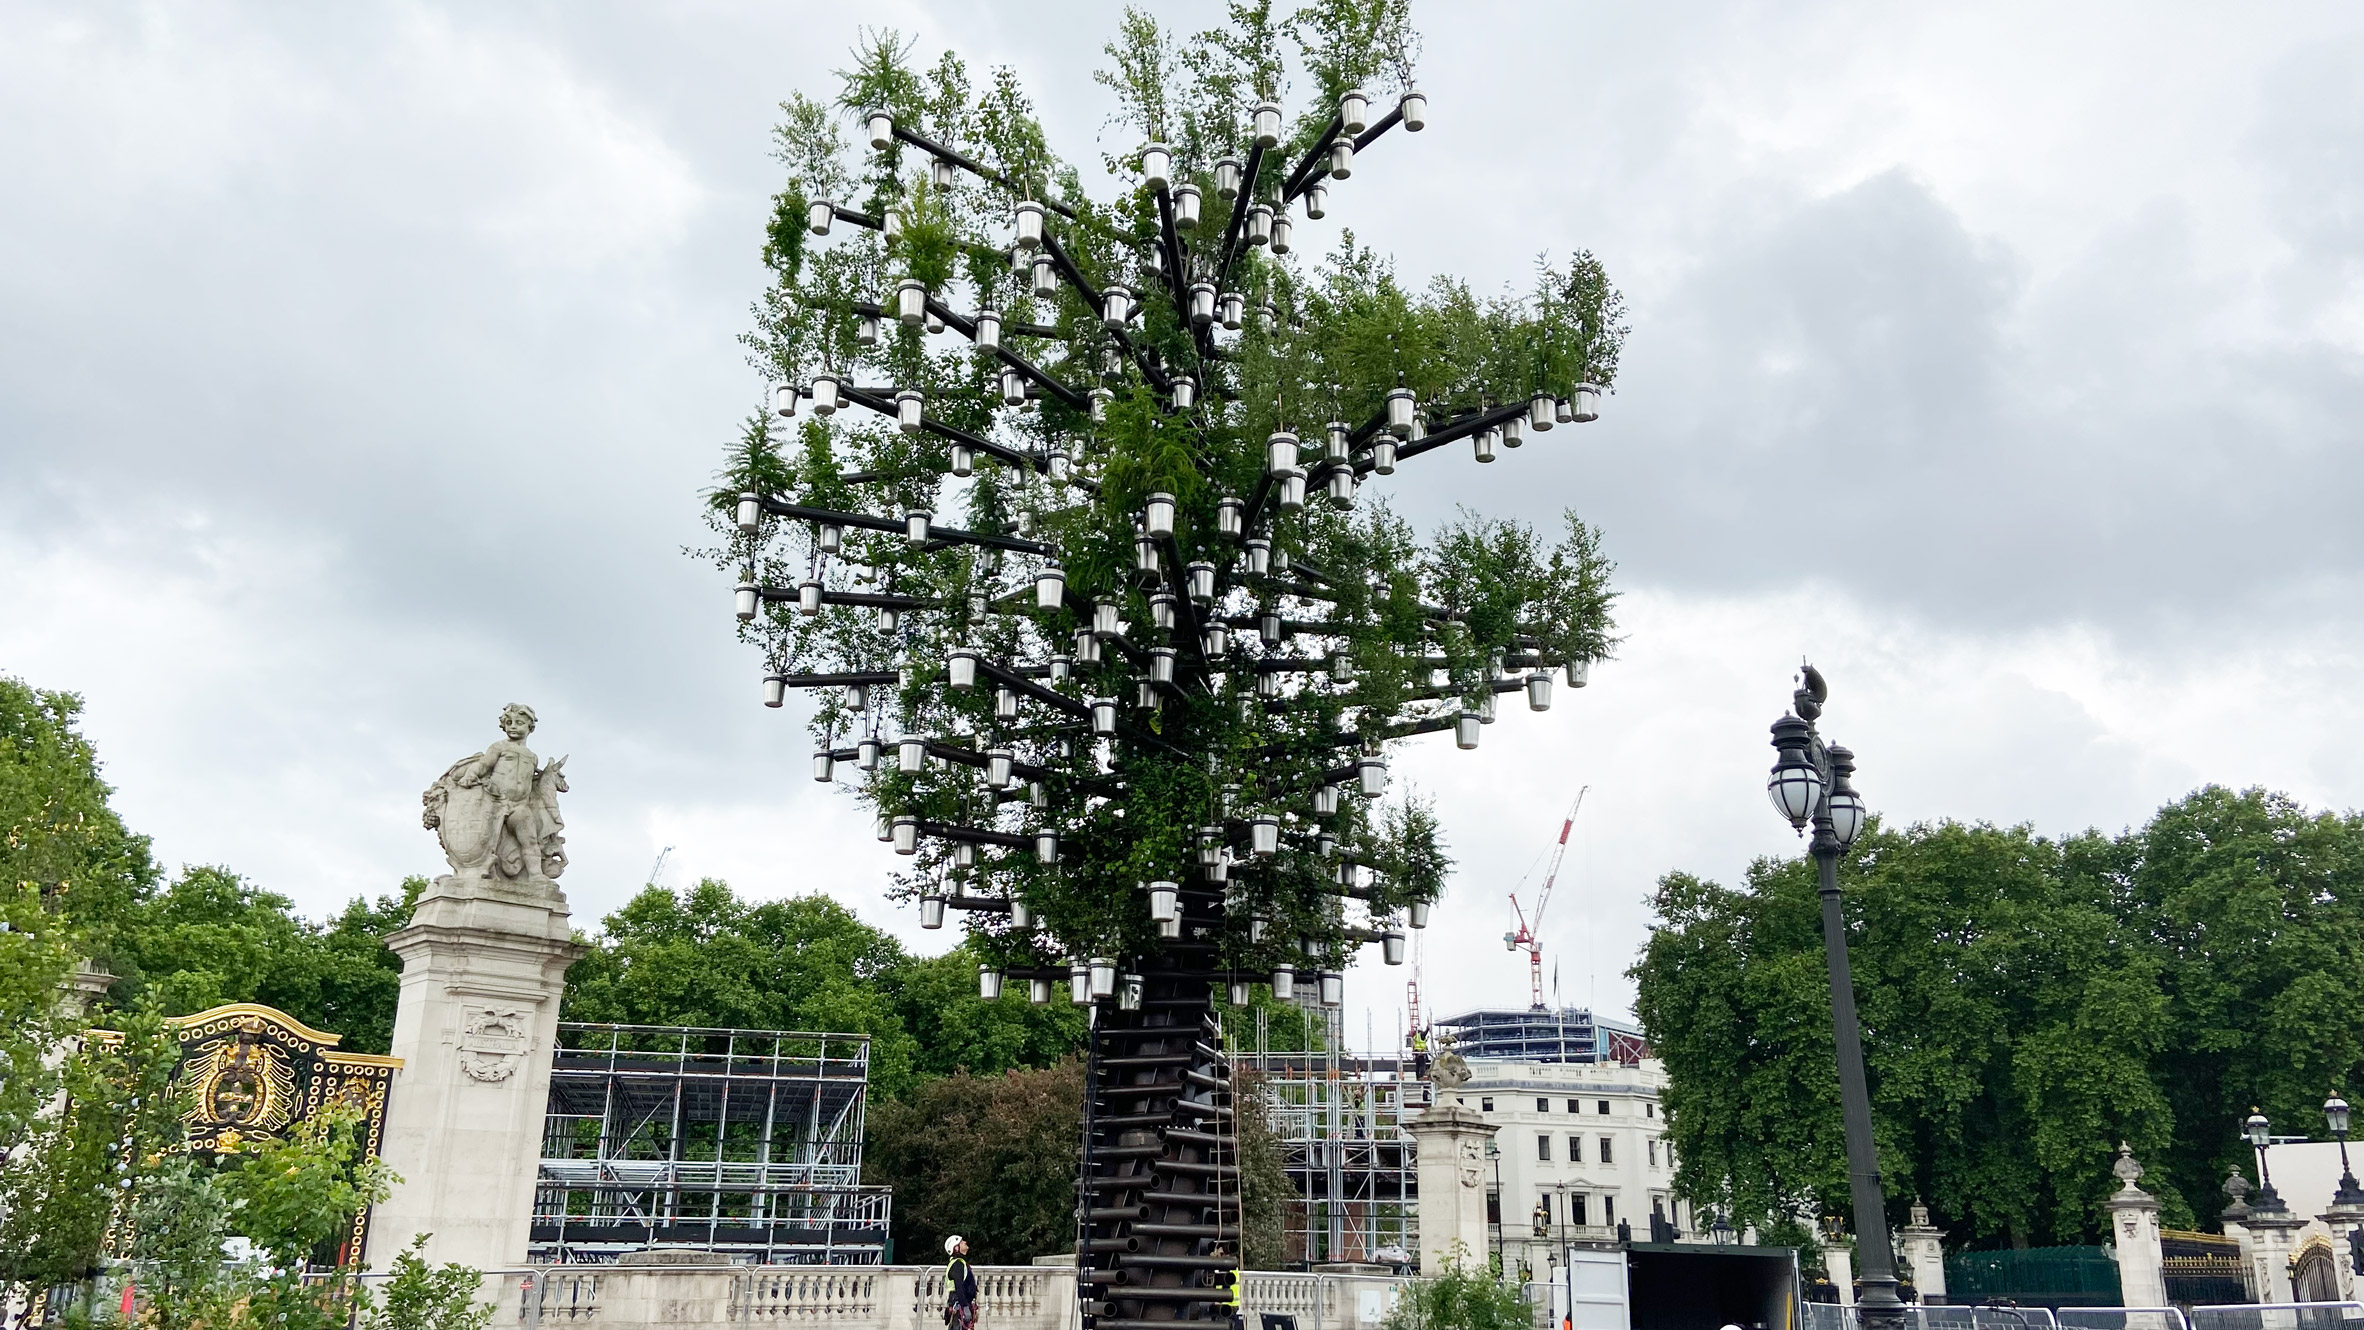 Heatherwick's Tree of Trees at Buckingham Palace